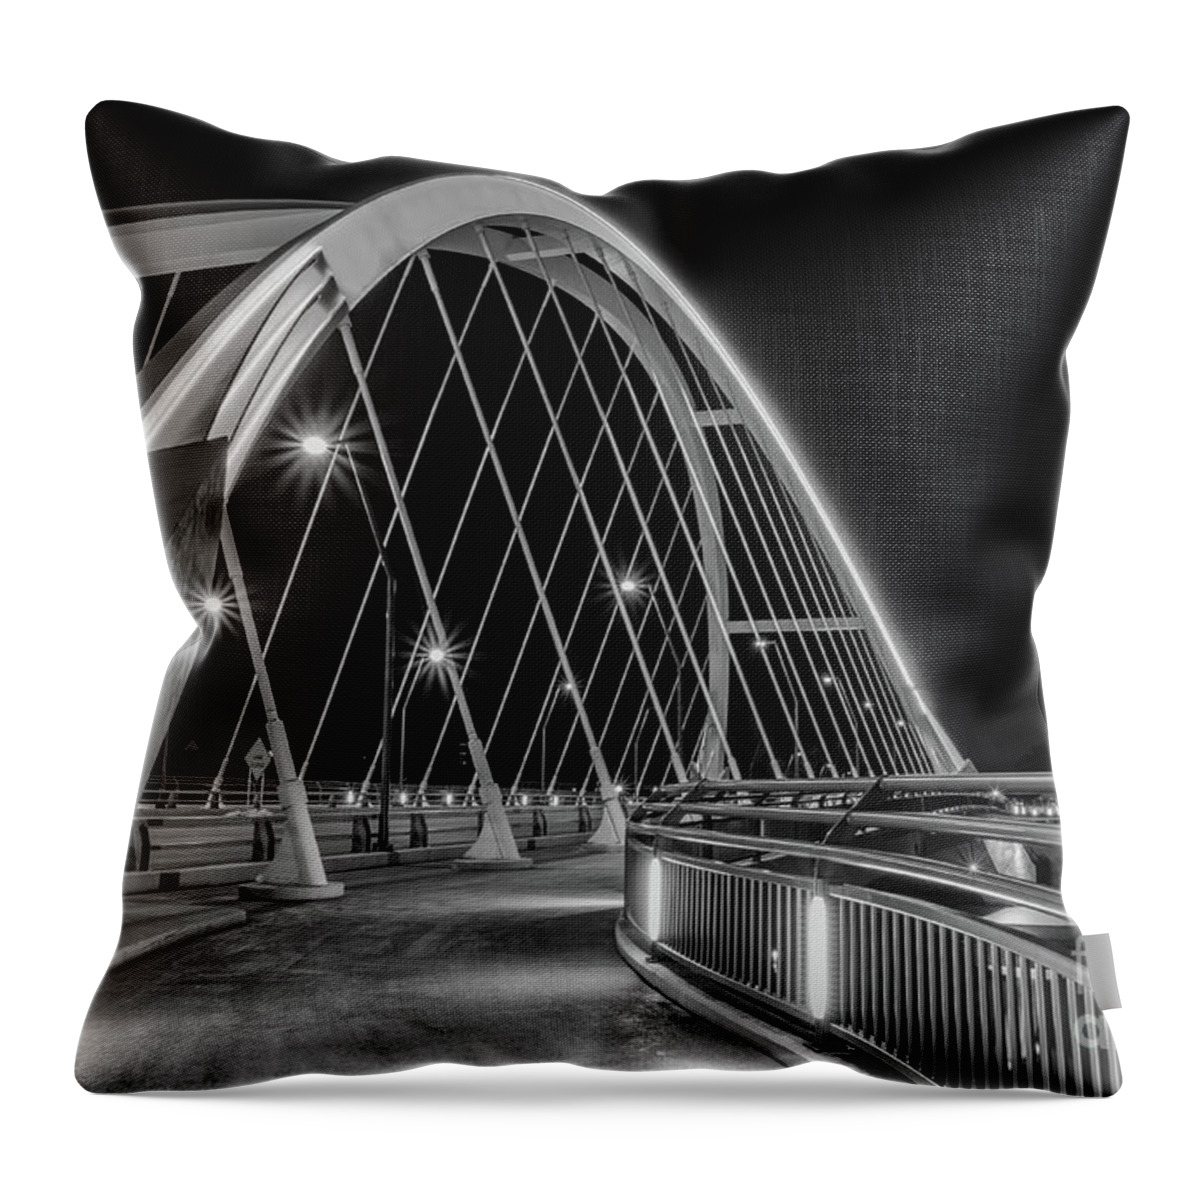 Lowry Avenue Bridge Throw Pillow featuring the photograph Lowry Avenue Bridge by Iryna Liveoak